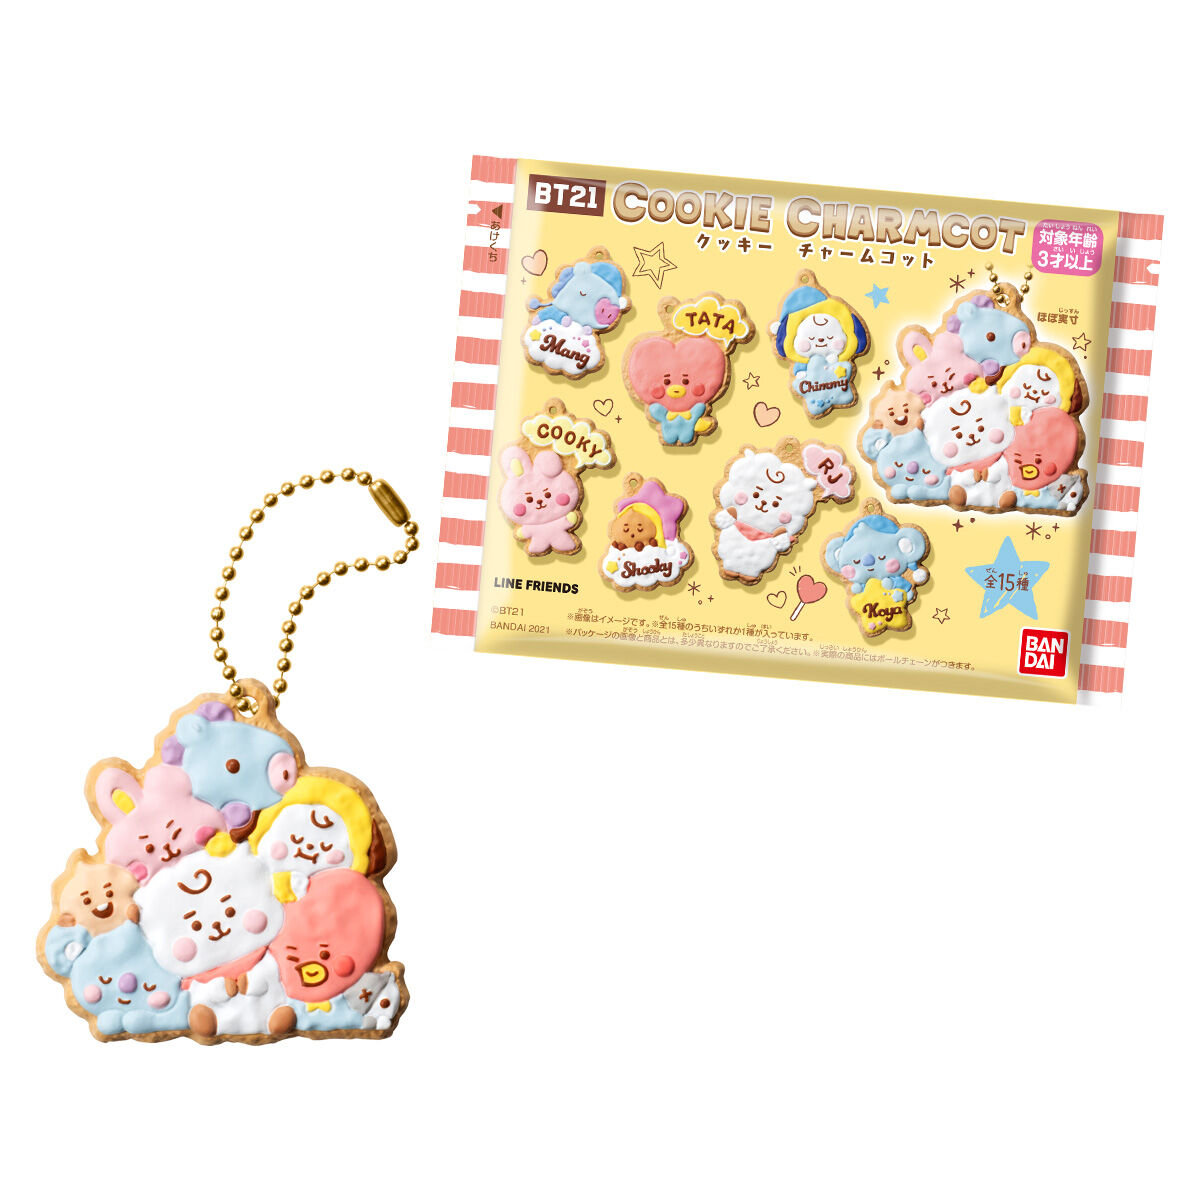 Bt21 クッキーチャームコット 発売日 21年10月26日 バンダイ キャンディ公式サイト